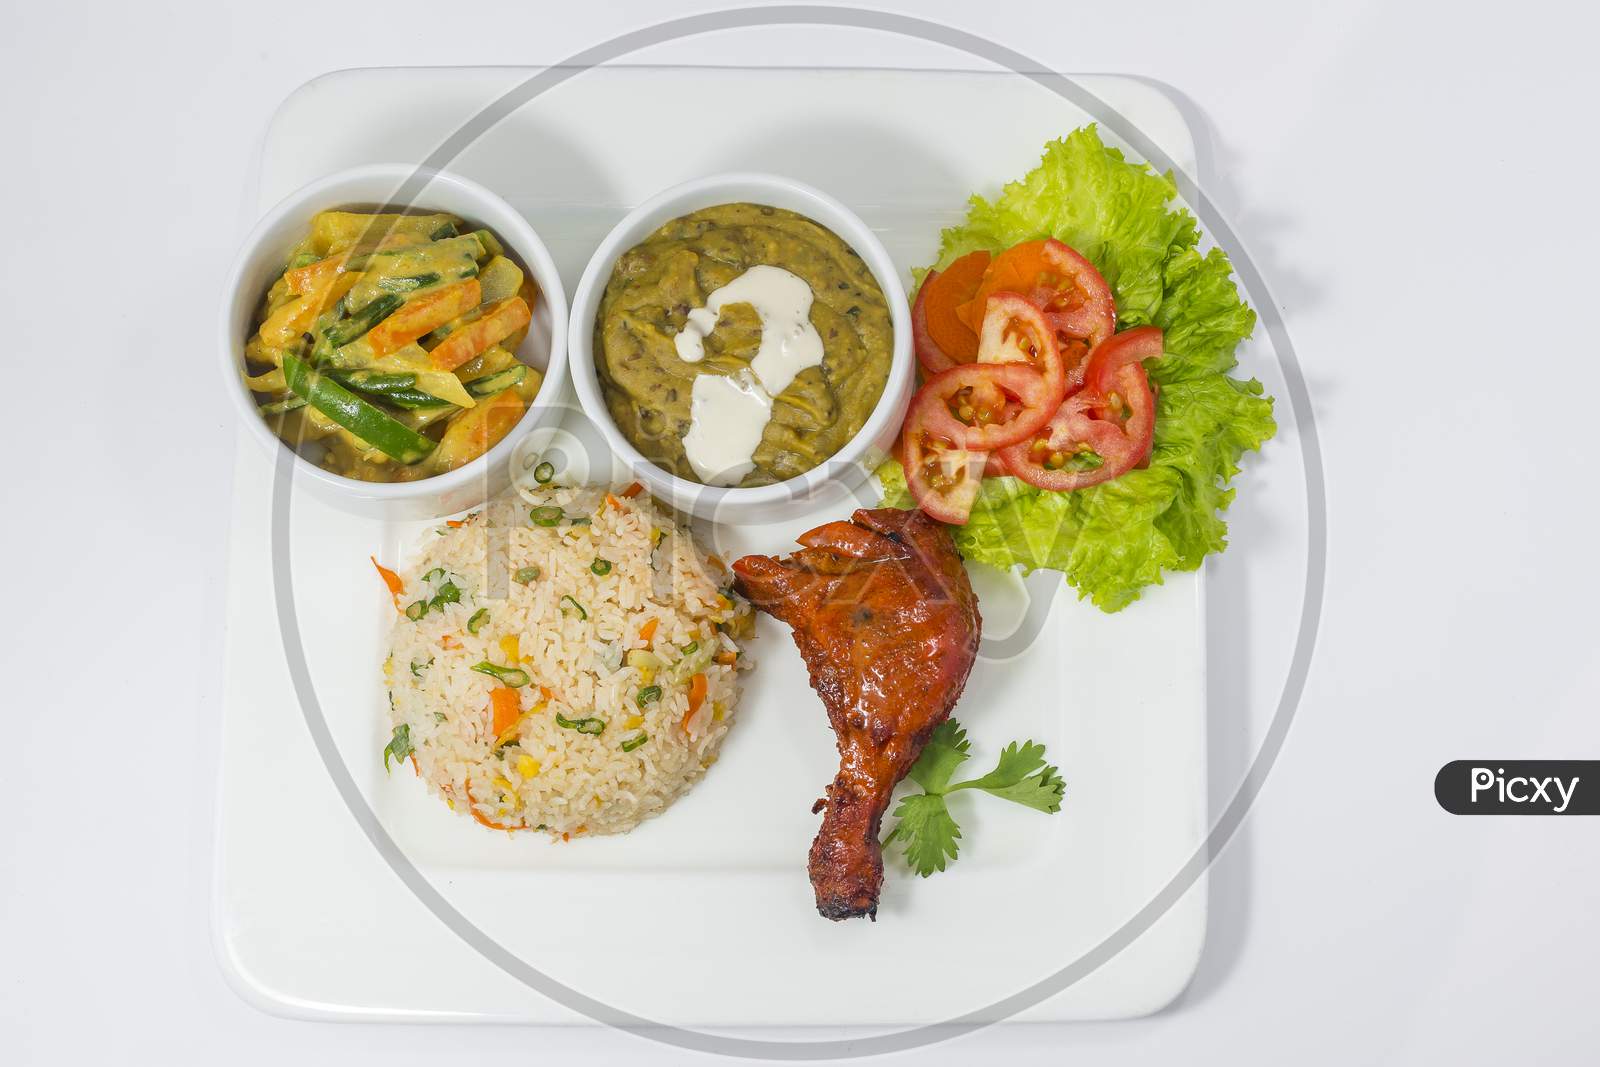 Tandoori Chicken, Dal Makhani, Mixed Vegetable, Green Salad and Fried Platter.